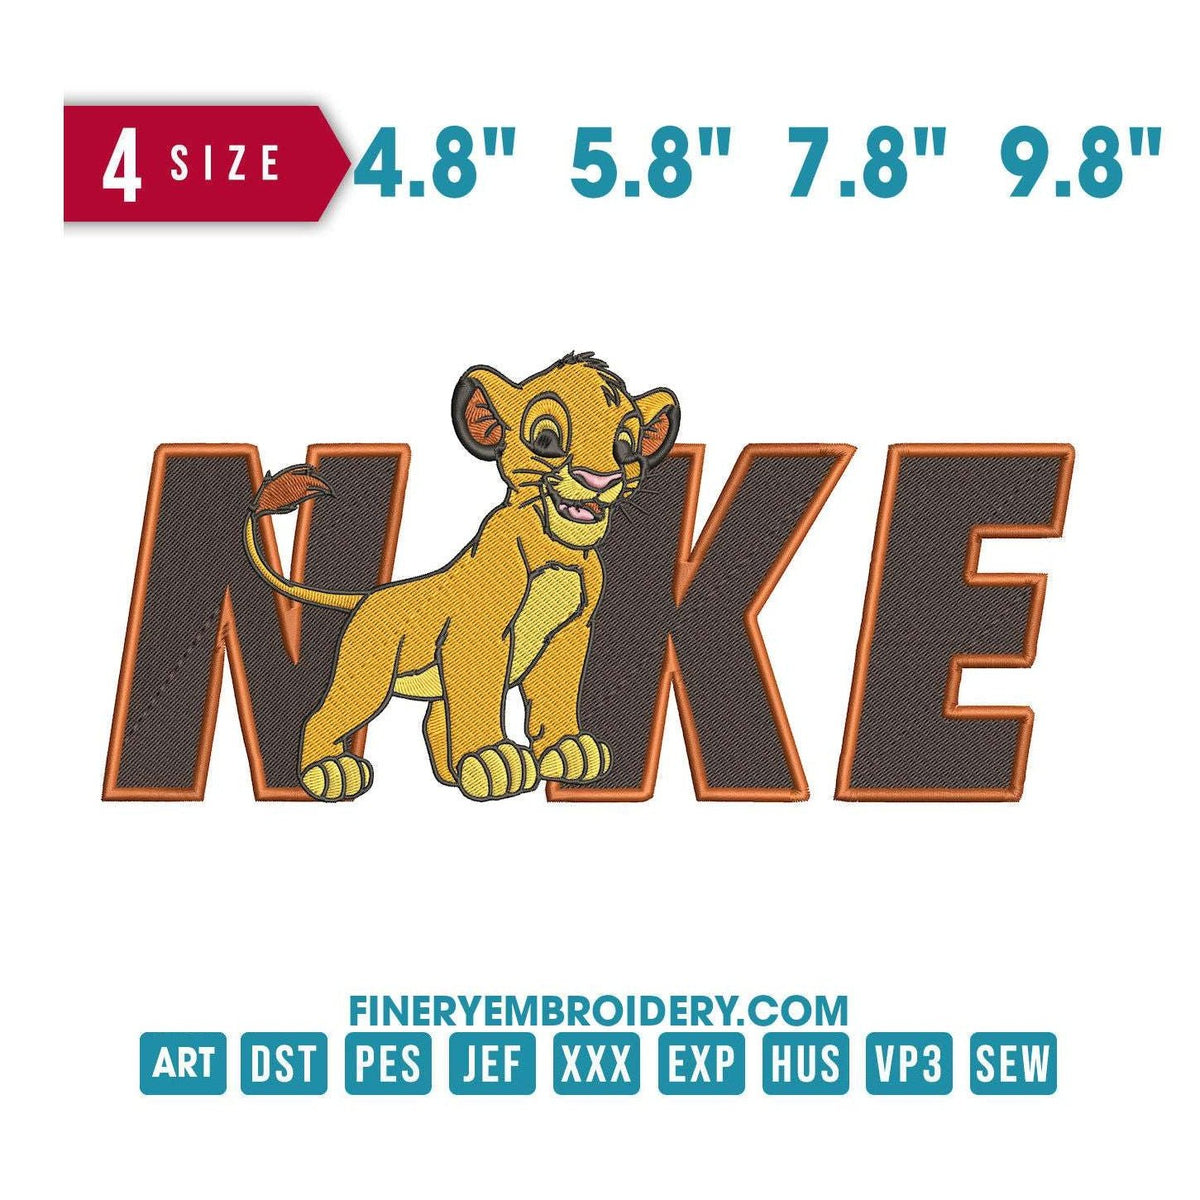 Nike Simba - Lion King - Embroidery Design FineryEmbroidery